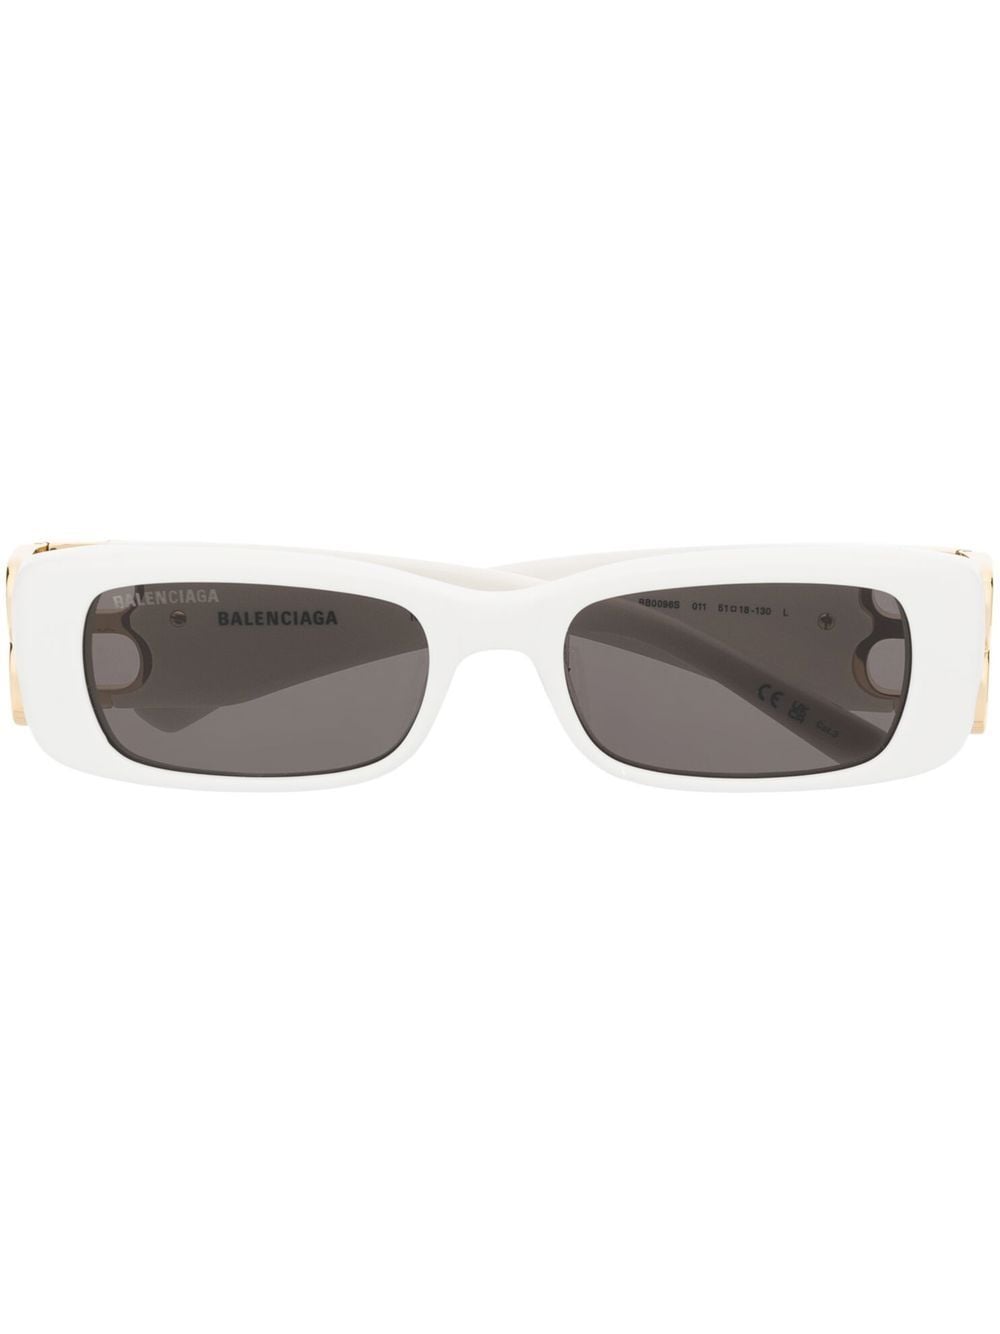 Image 1 of Balenciaga Eyewear BB0096S BB-plaque sunglasses